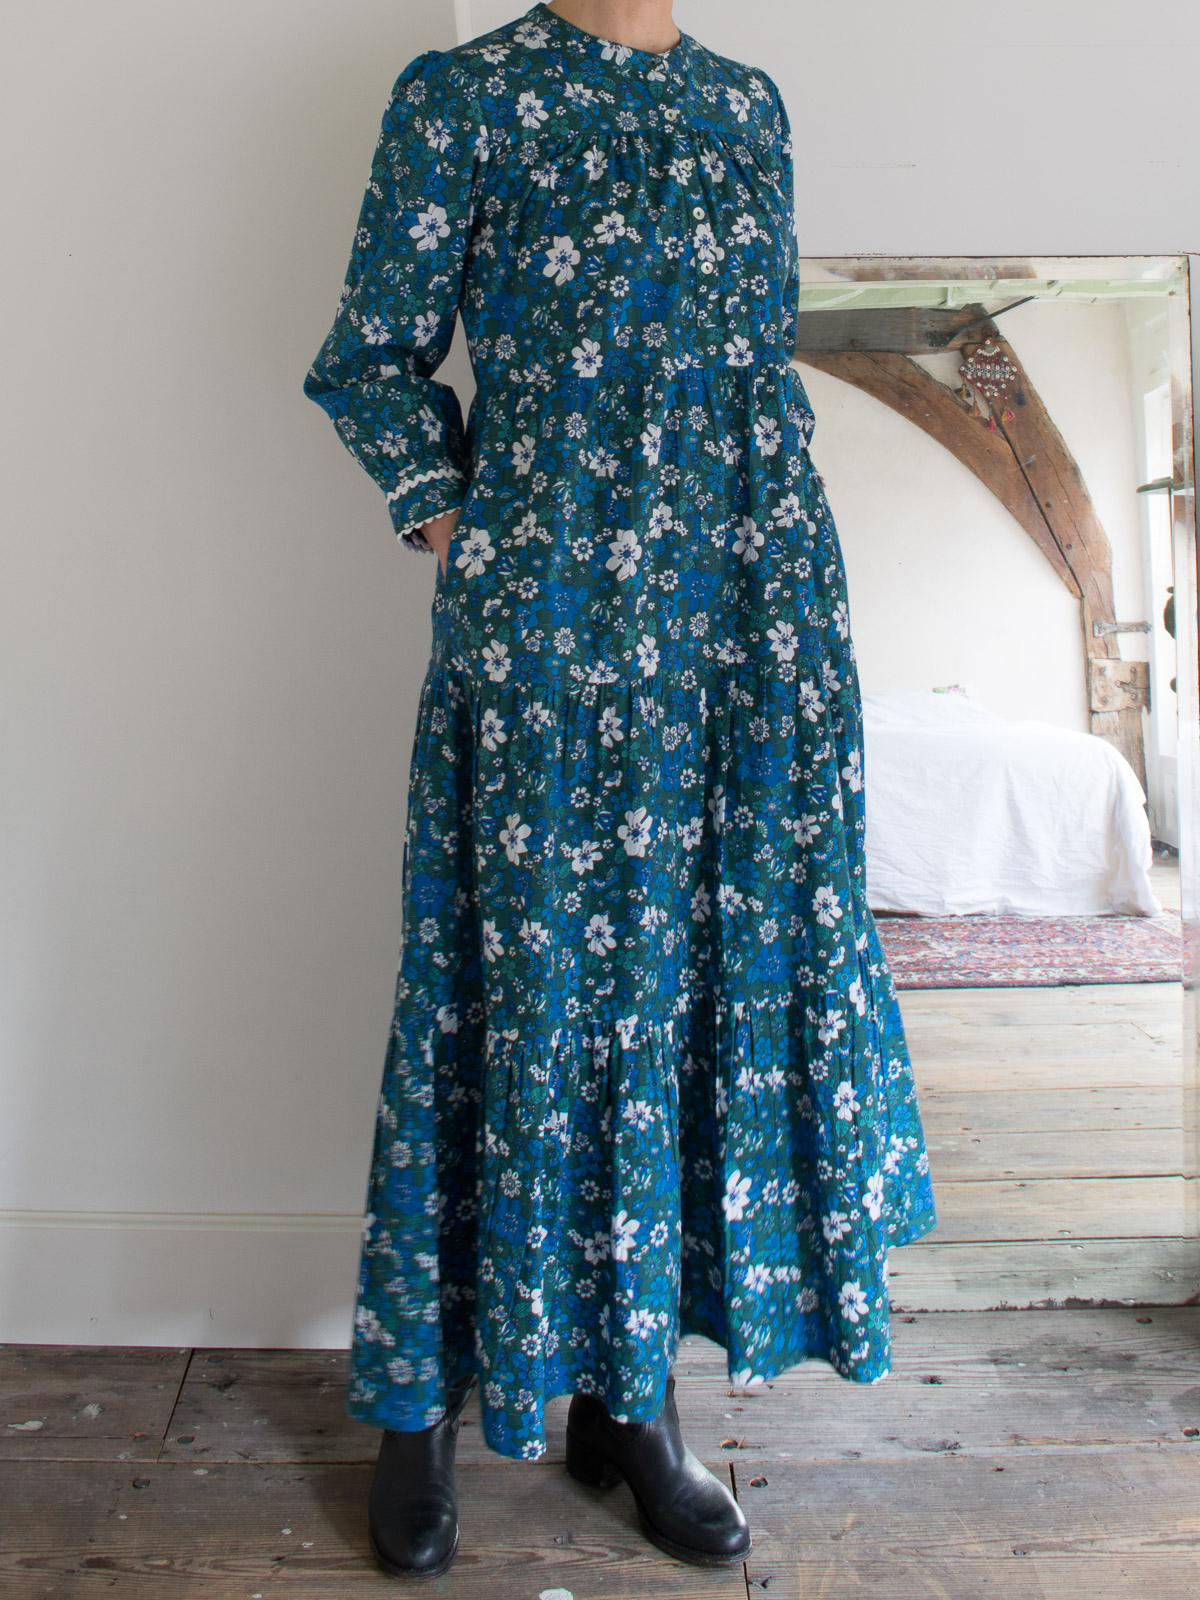 Leger toenemen Glimmend blauw-groen gebloemde jurk - elegante, kleurrijke, comfortabele jurken -  kleding - Ottomania.nl | de officiële Ottomania website